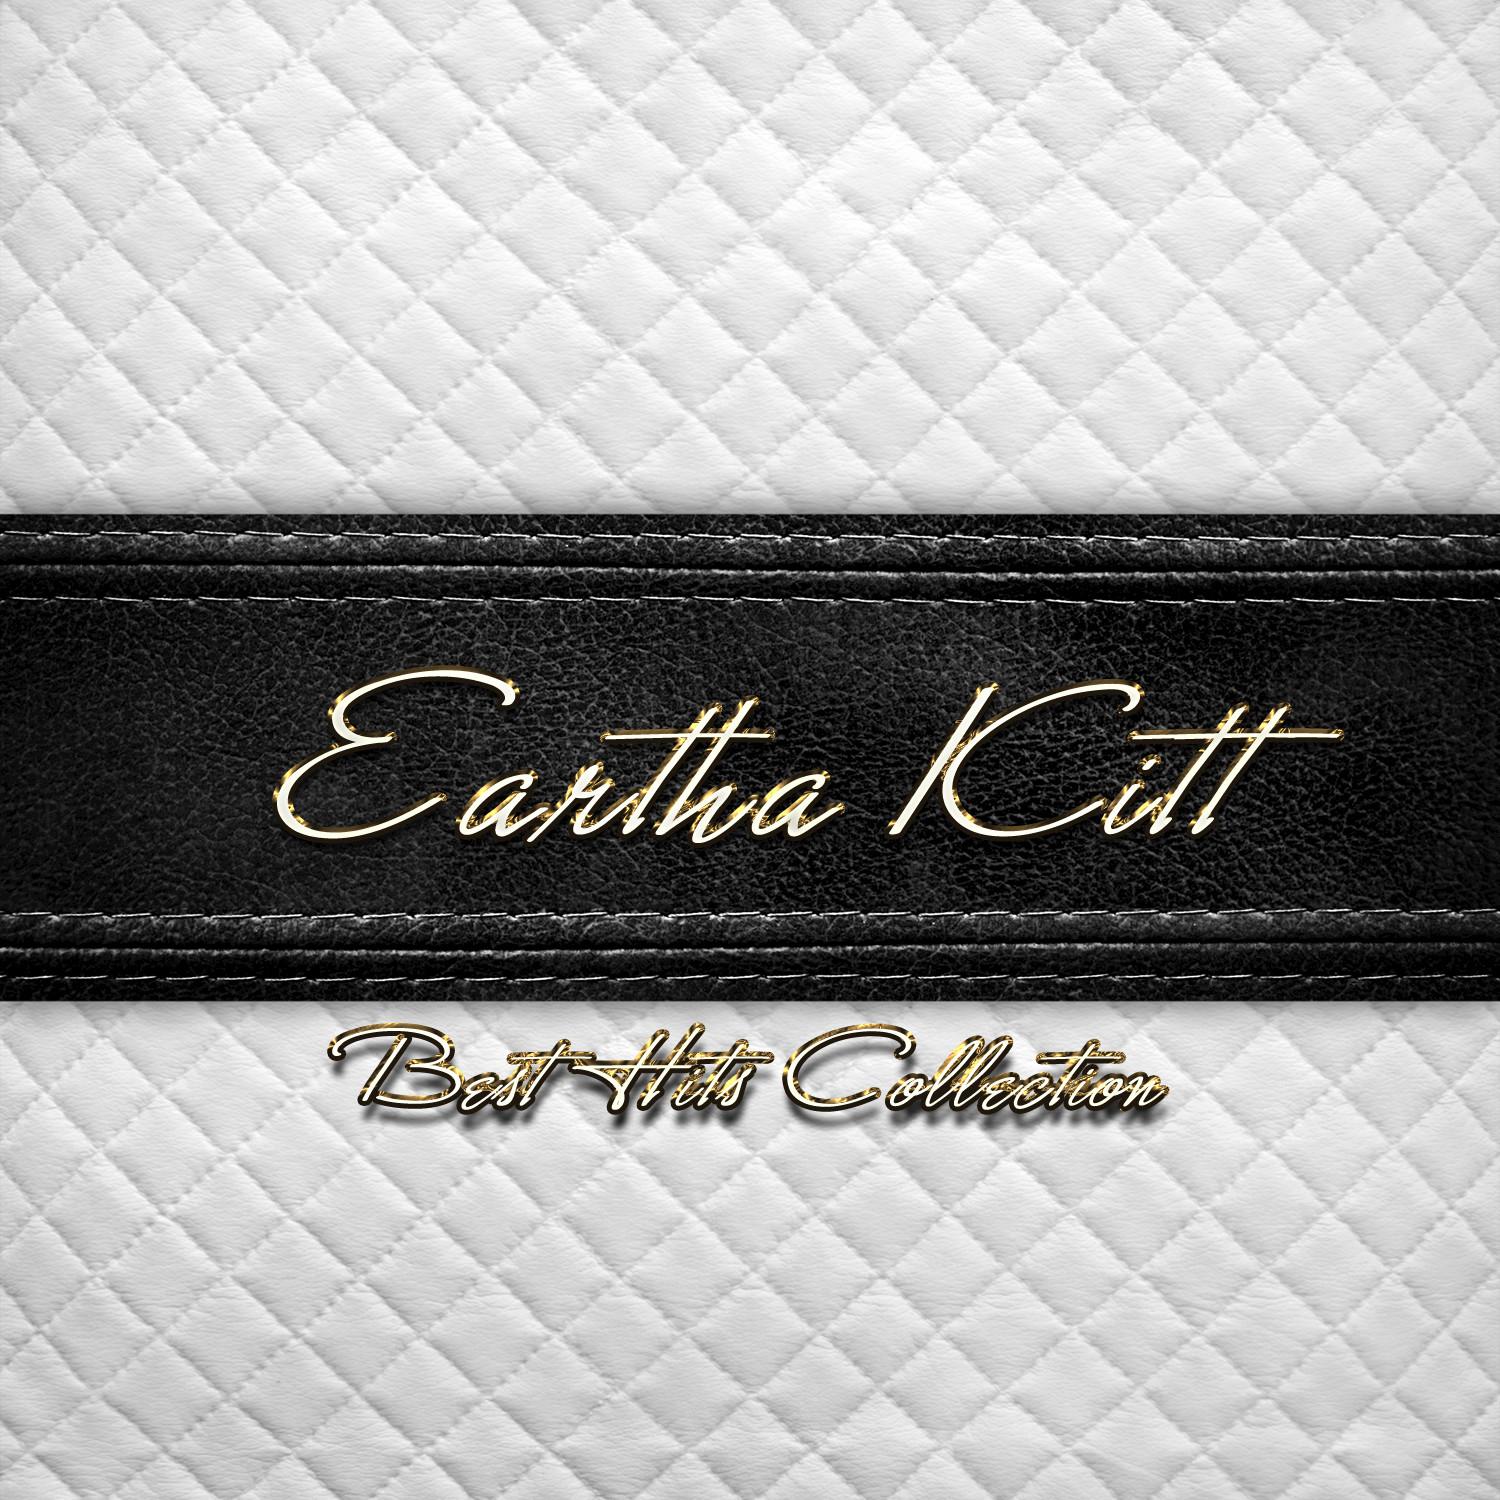 Best Hits Collection of Eartha Kitt